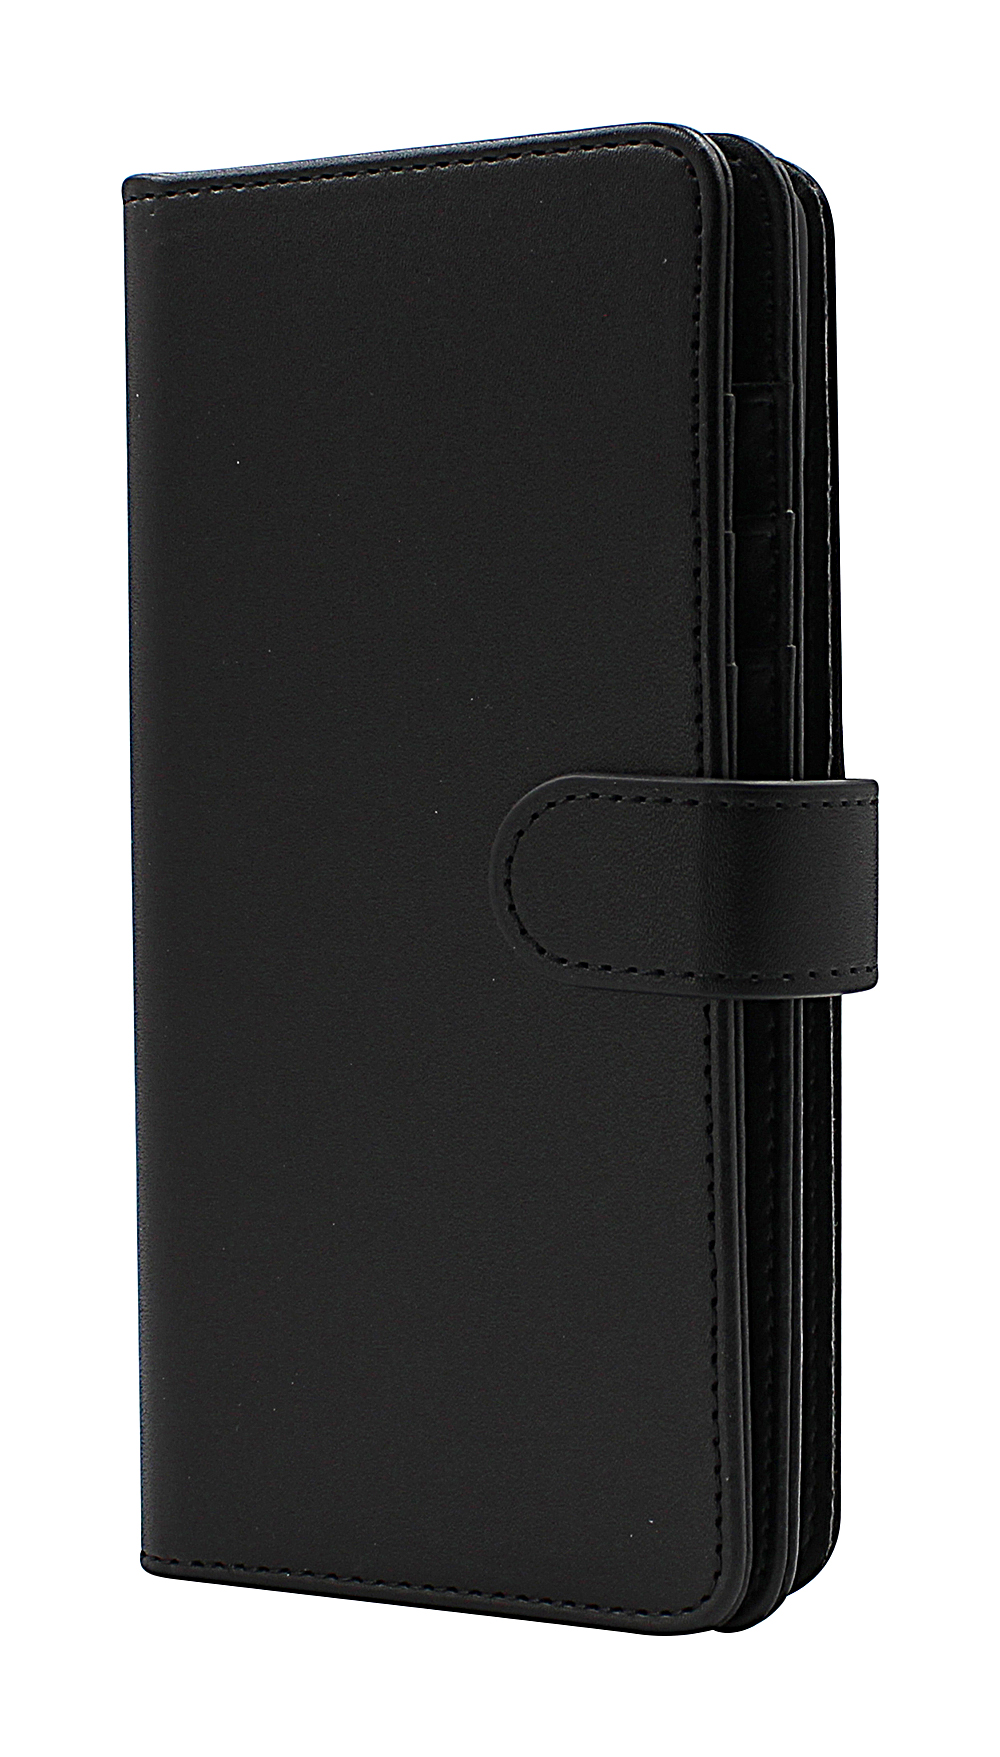 Skimblocker XL Magnet Wallet Huawei Mate 40 Pro